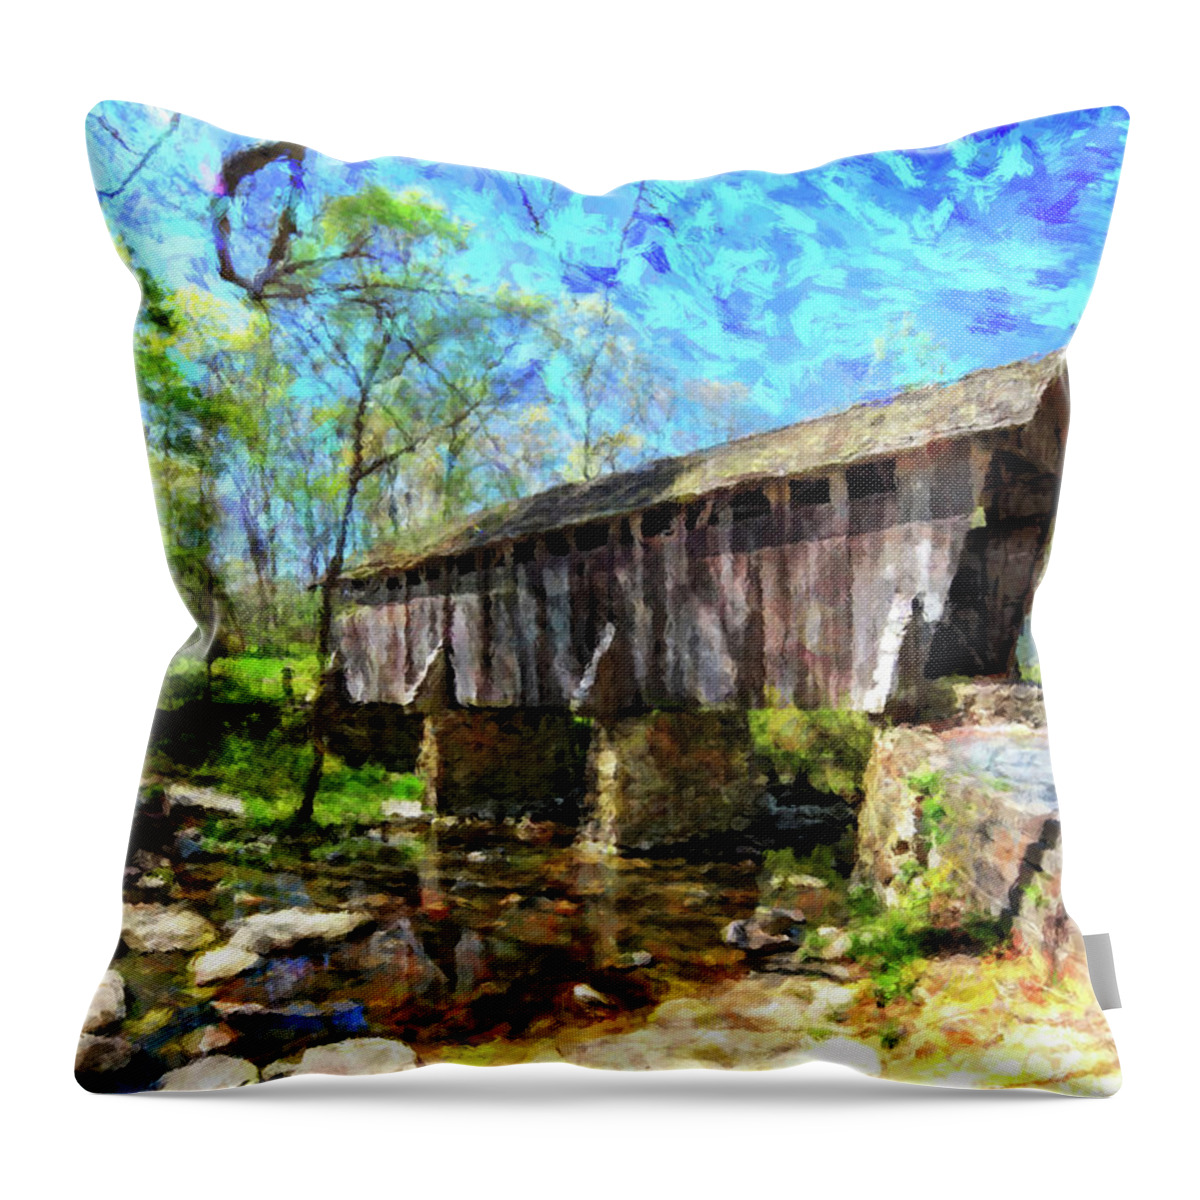 Pisgah Covered Bridge Throw Pillow featuring the digital art Pisgah Covered Bridge by SnapHappy Photos